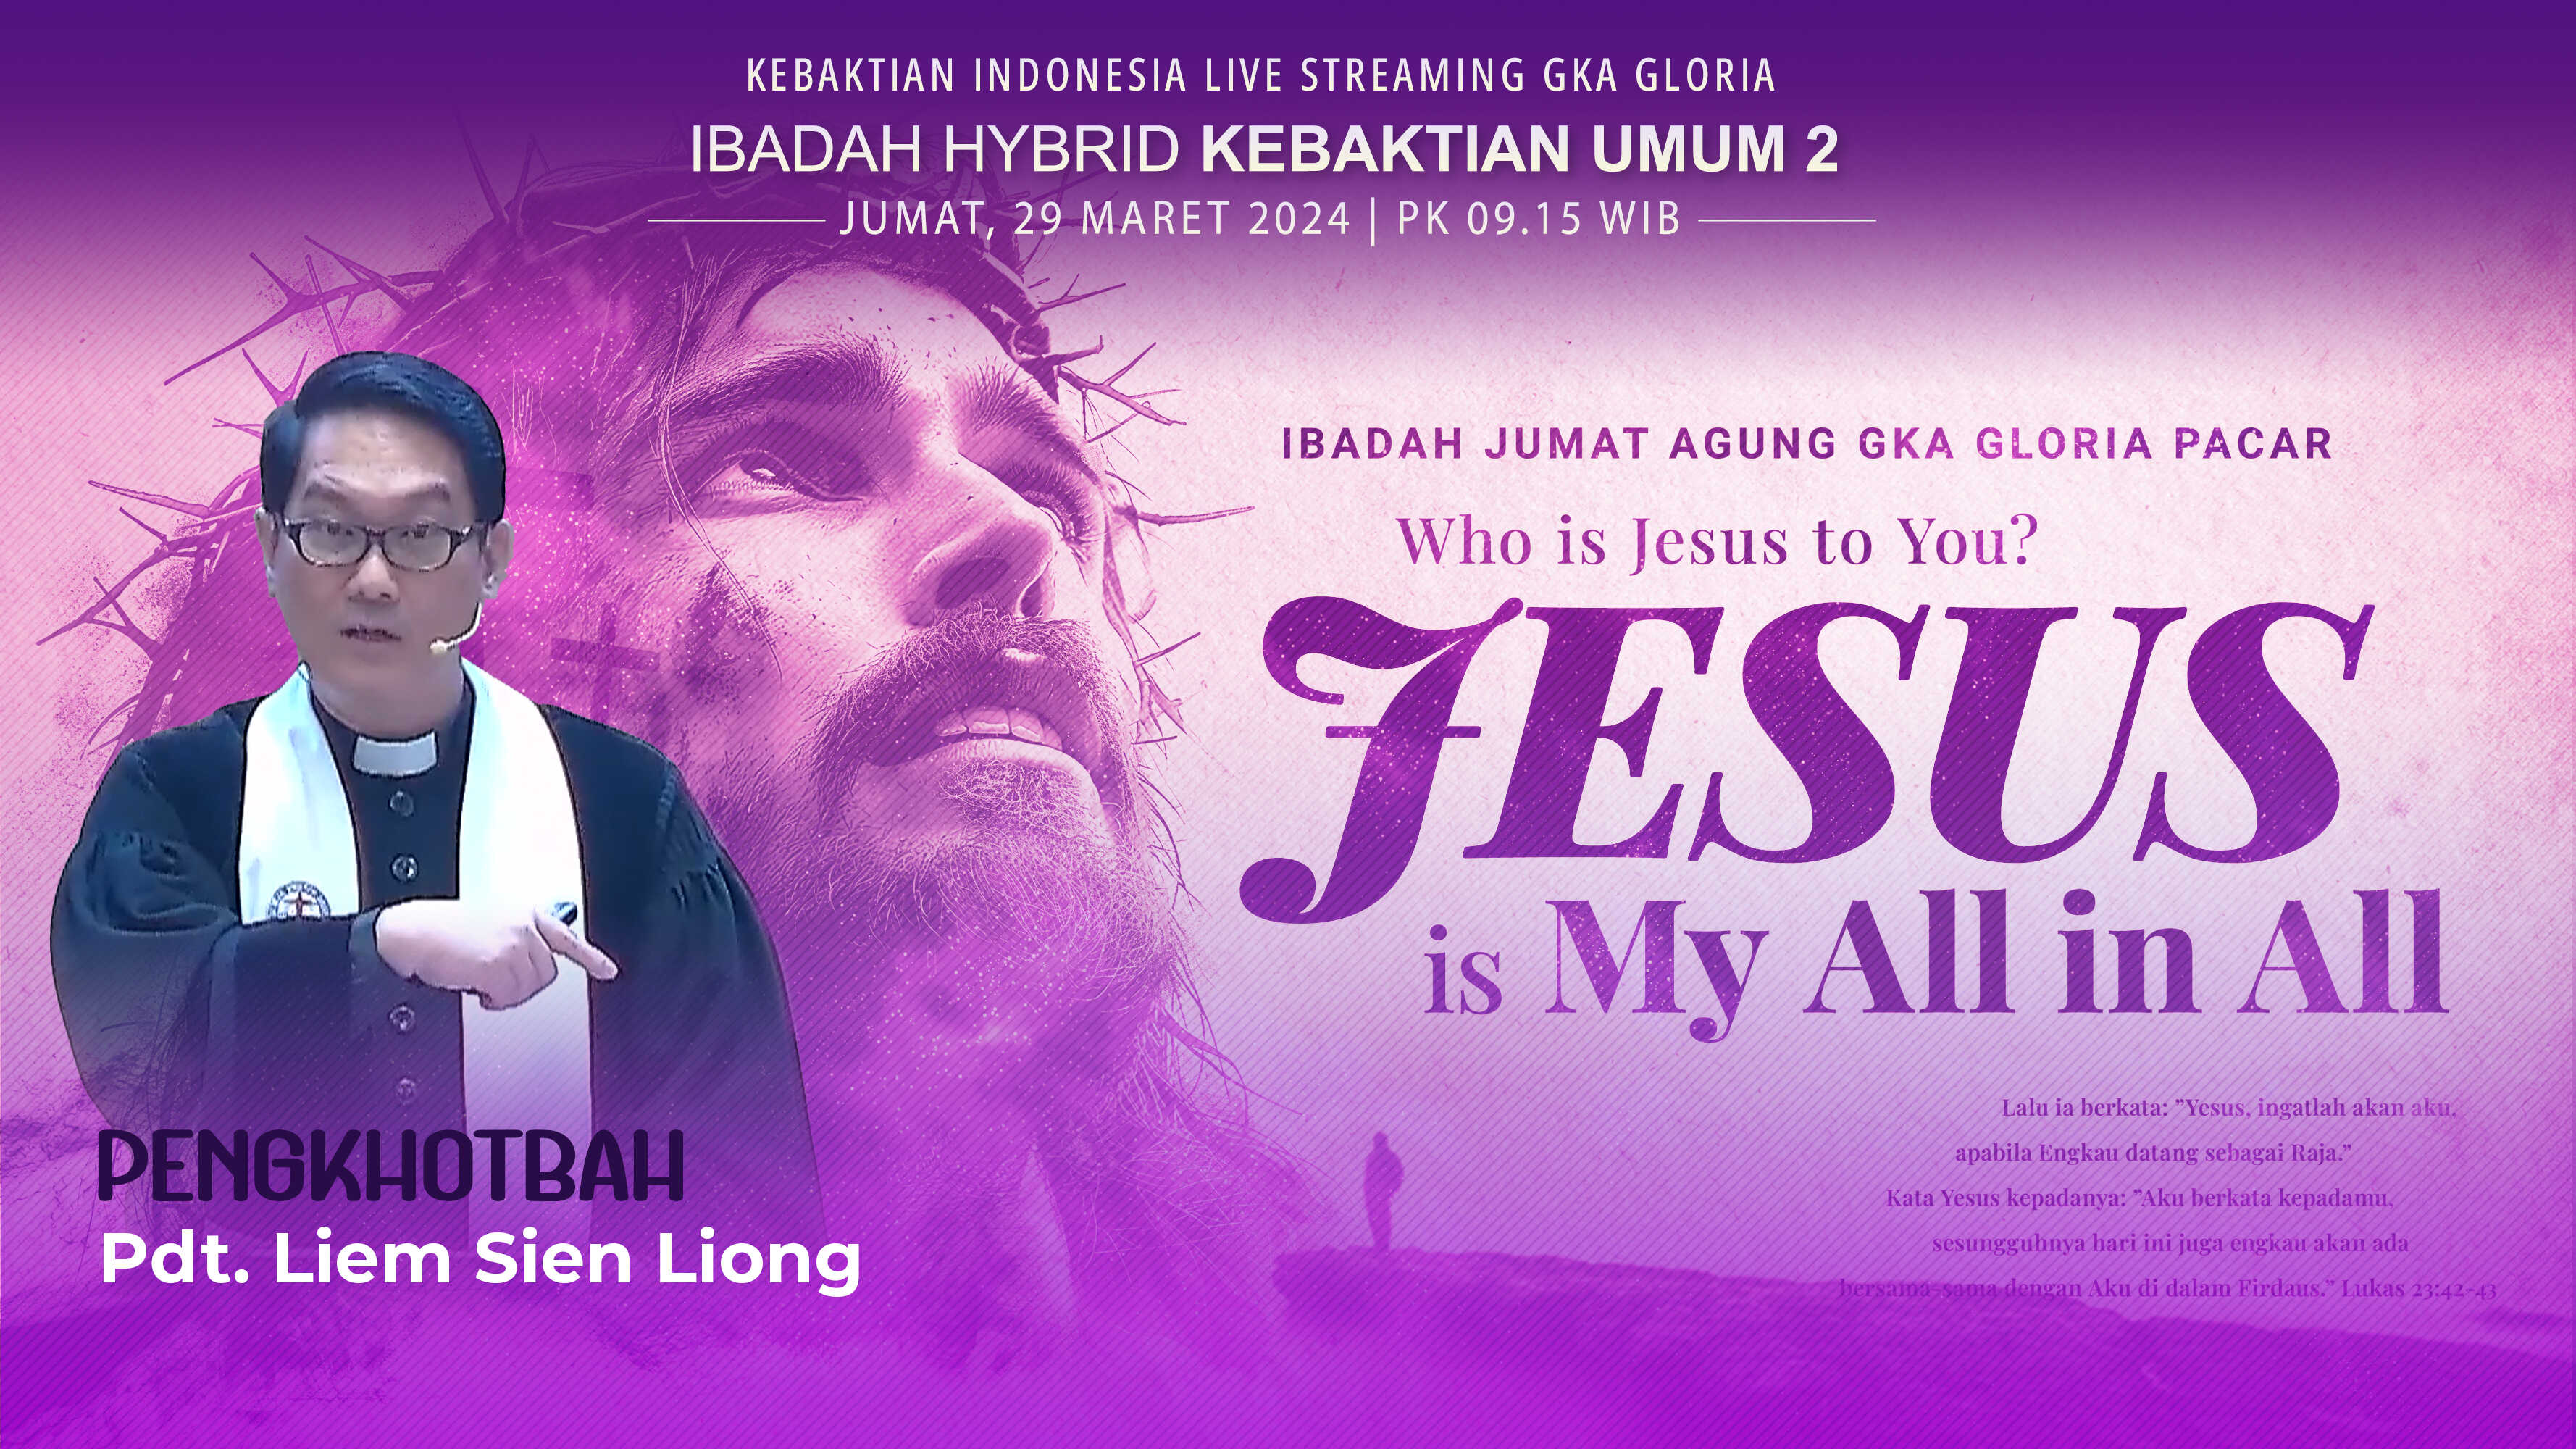 Kebaktian Umum 2 Pacar - Jesus is My All in All | 08.45 WIB